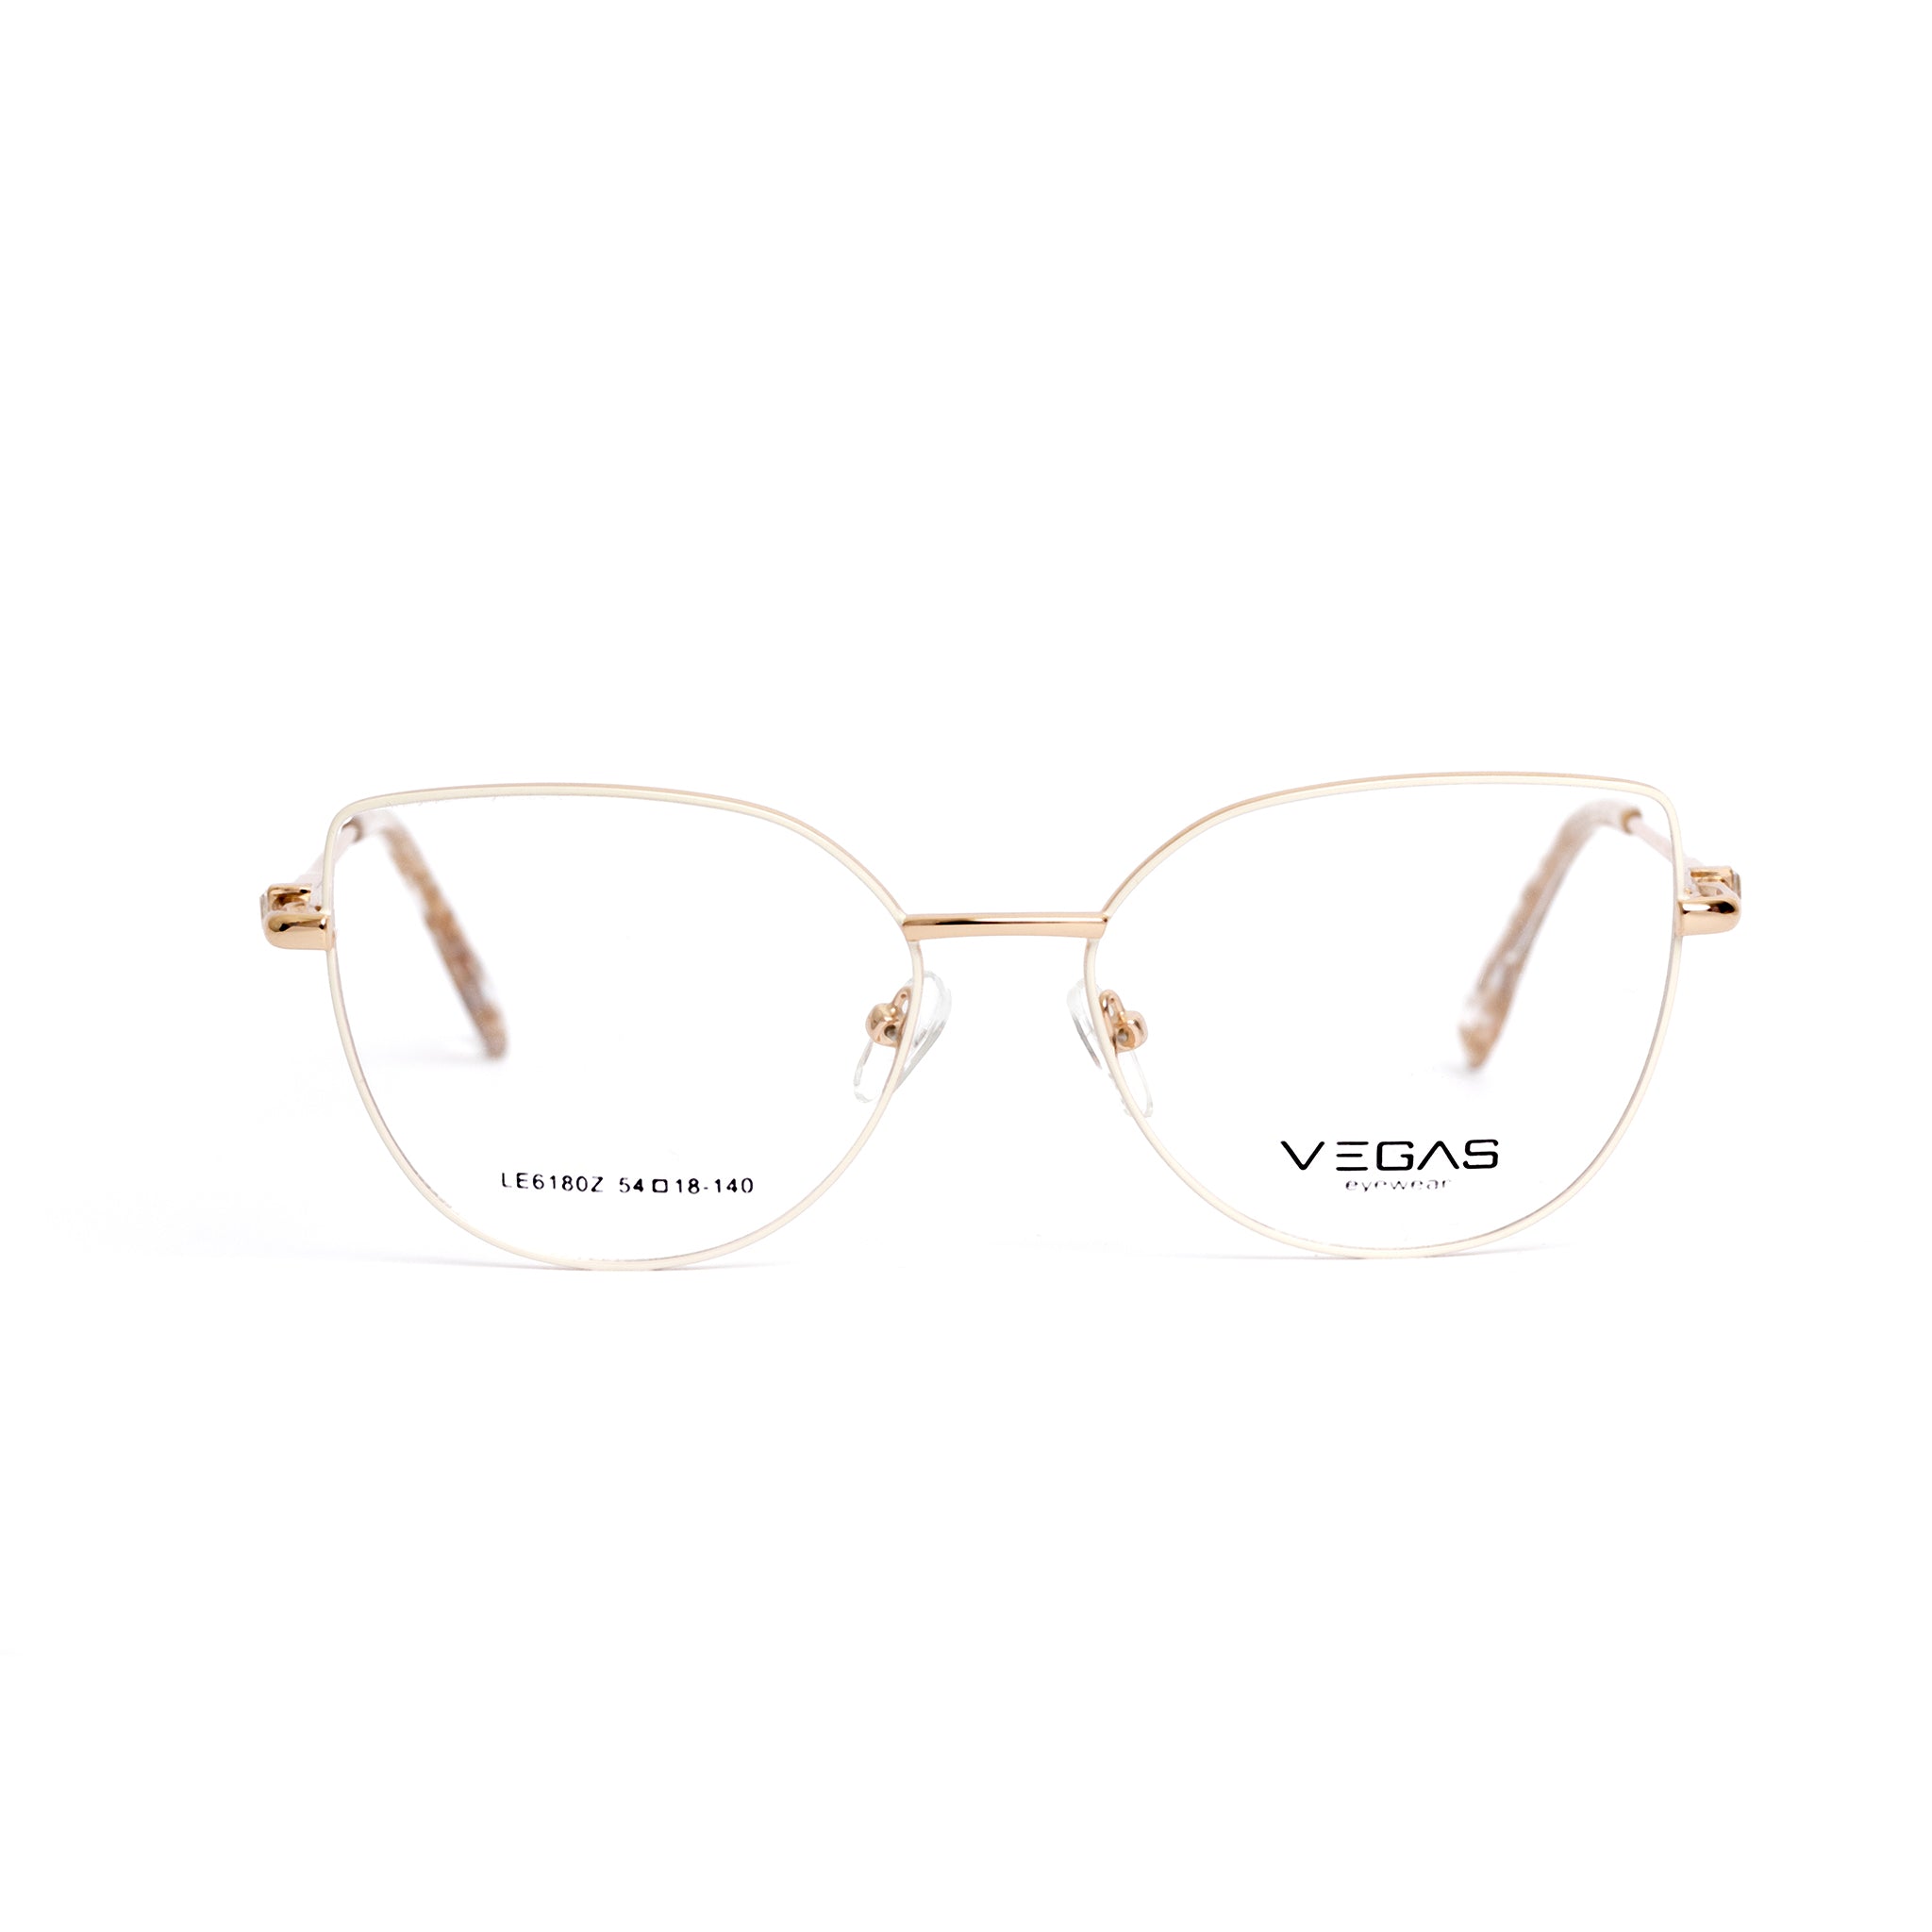 VEGAS LE6180Z - COC Eyewear